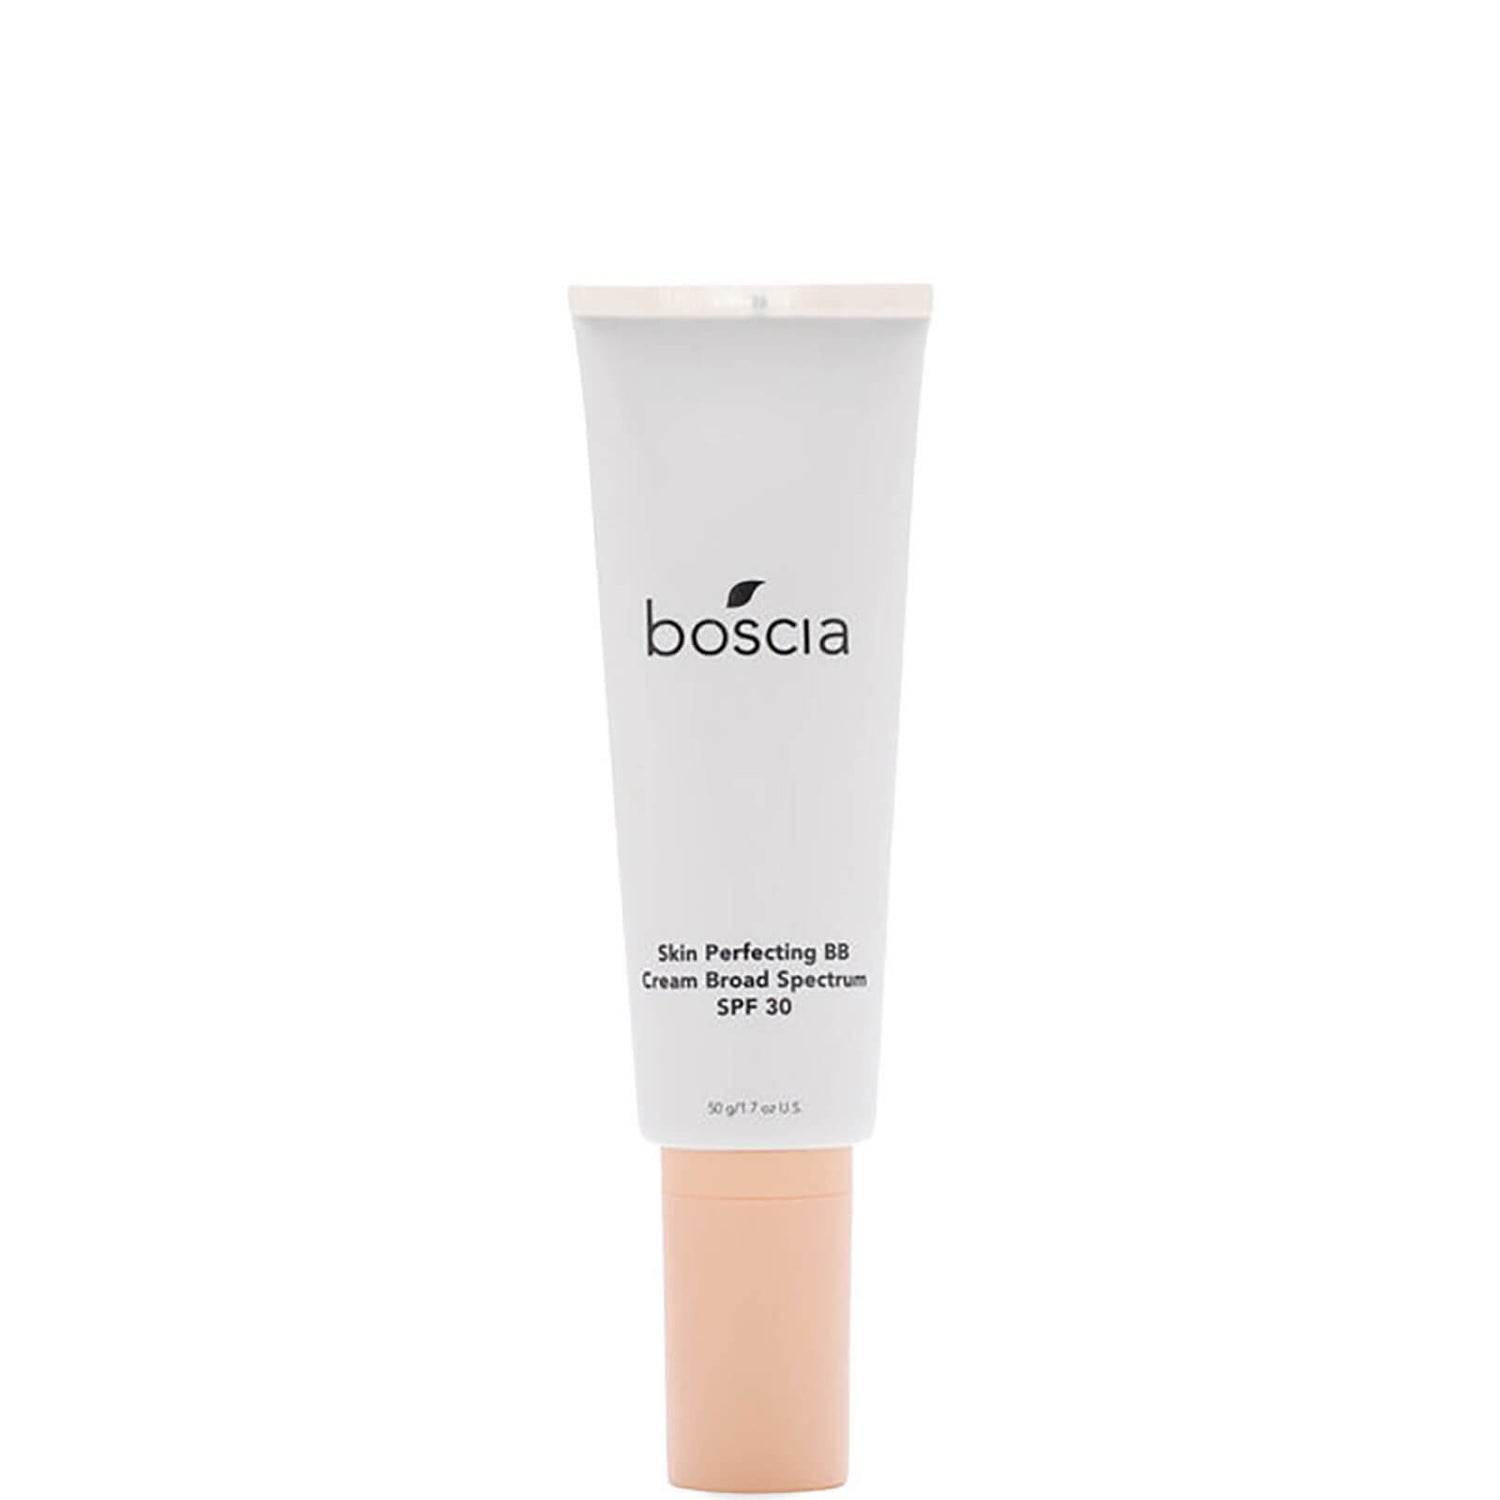 boscia Skin Perfecting BB Cream Broad Spectrum SPF 30 (1.7 oz.)